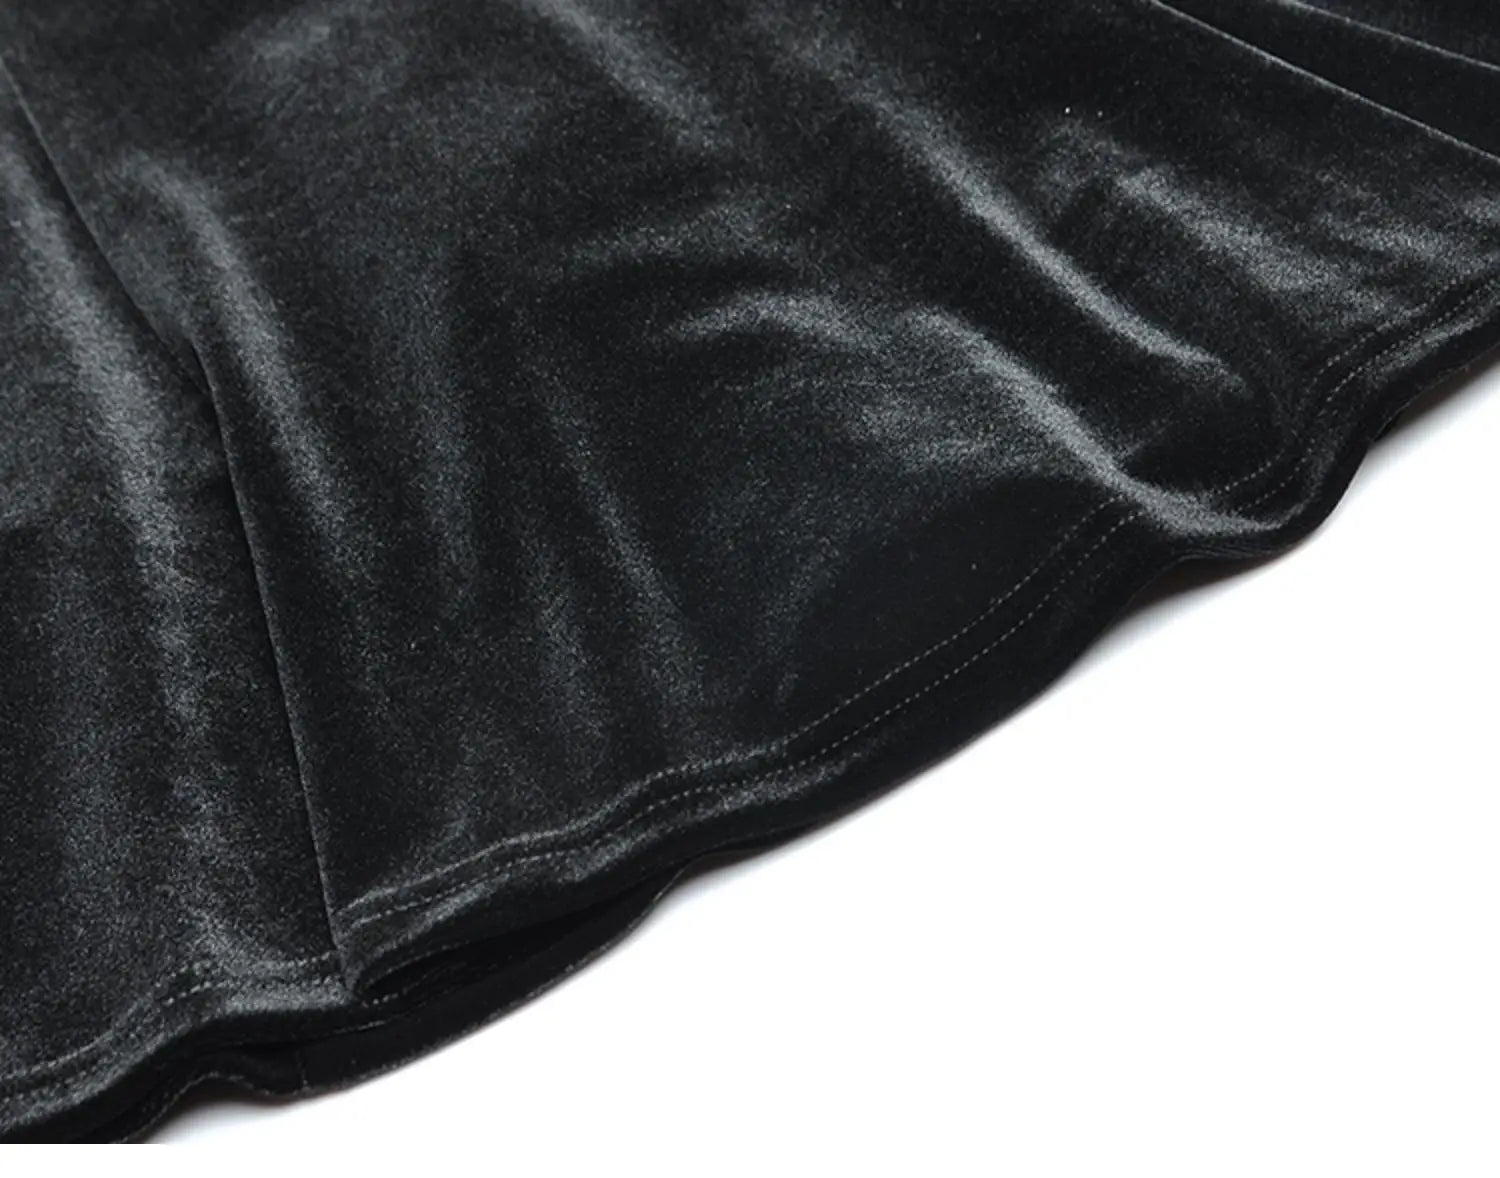 DRESS STYLE - SY700-Midi Dress-onlinemarkat-black-XS - US 2-onlinemarkat